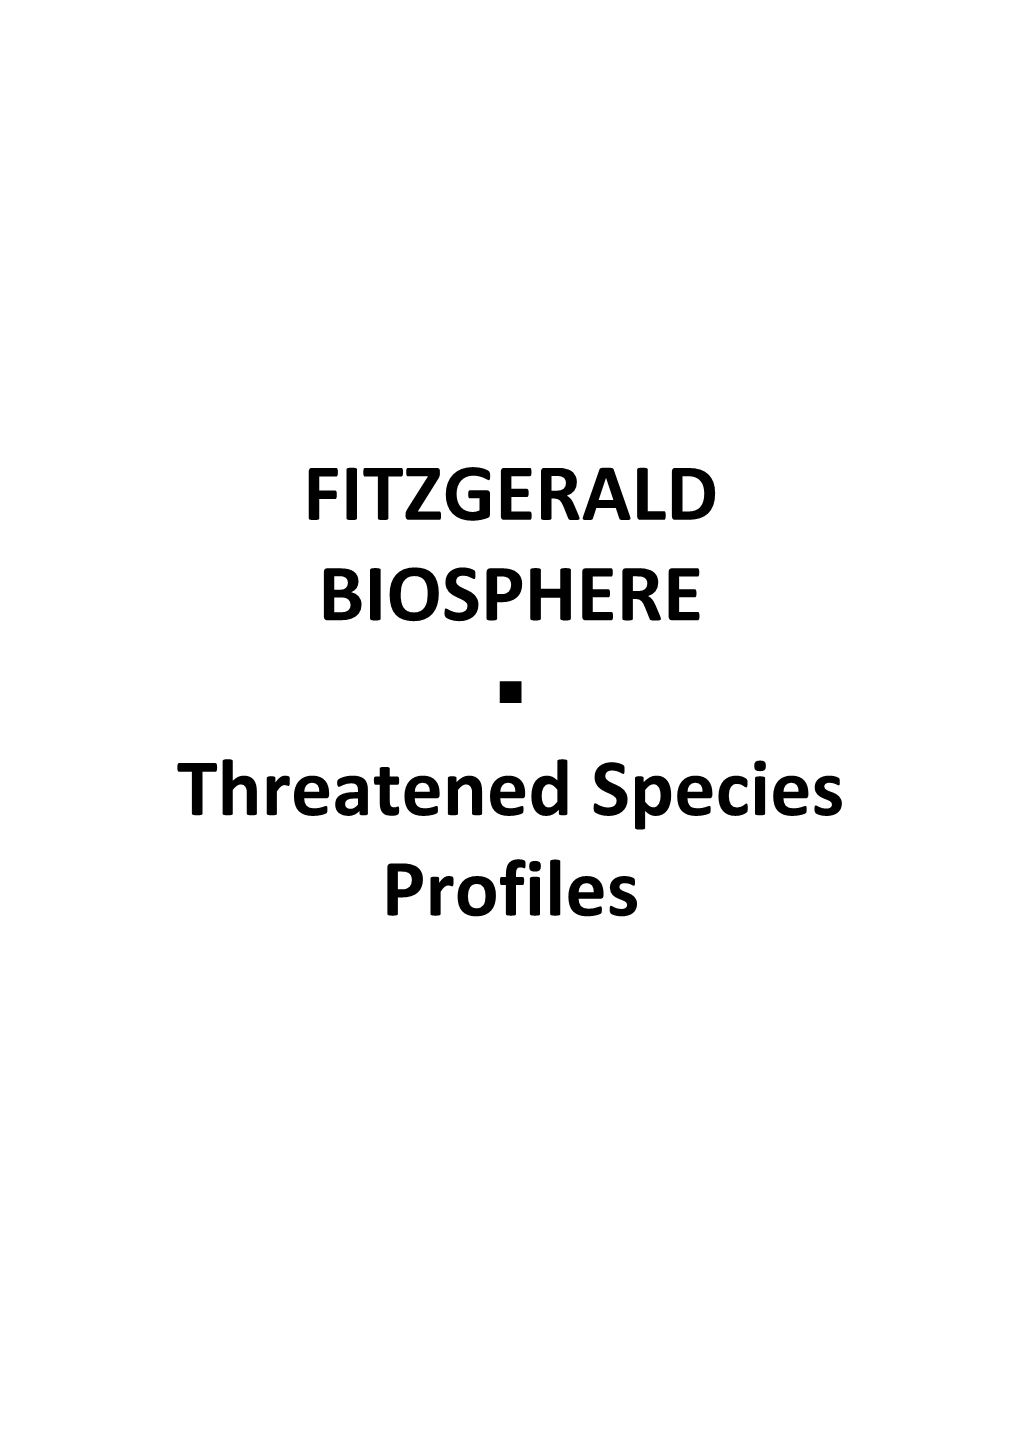 FITZGERALD BIOSPHERE Threatened Species Profiles